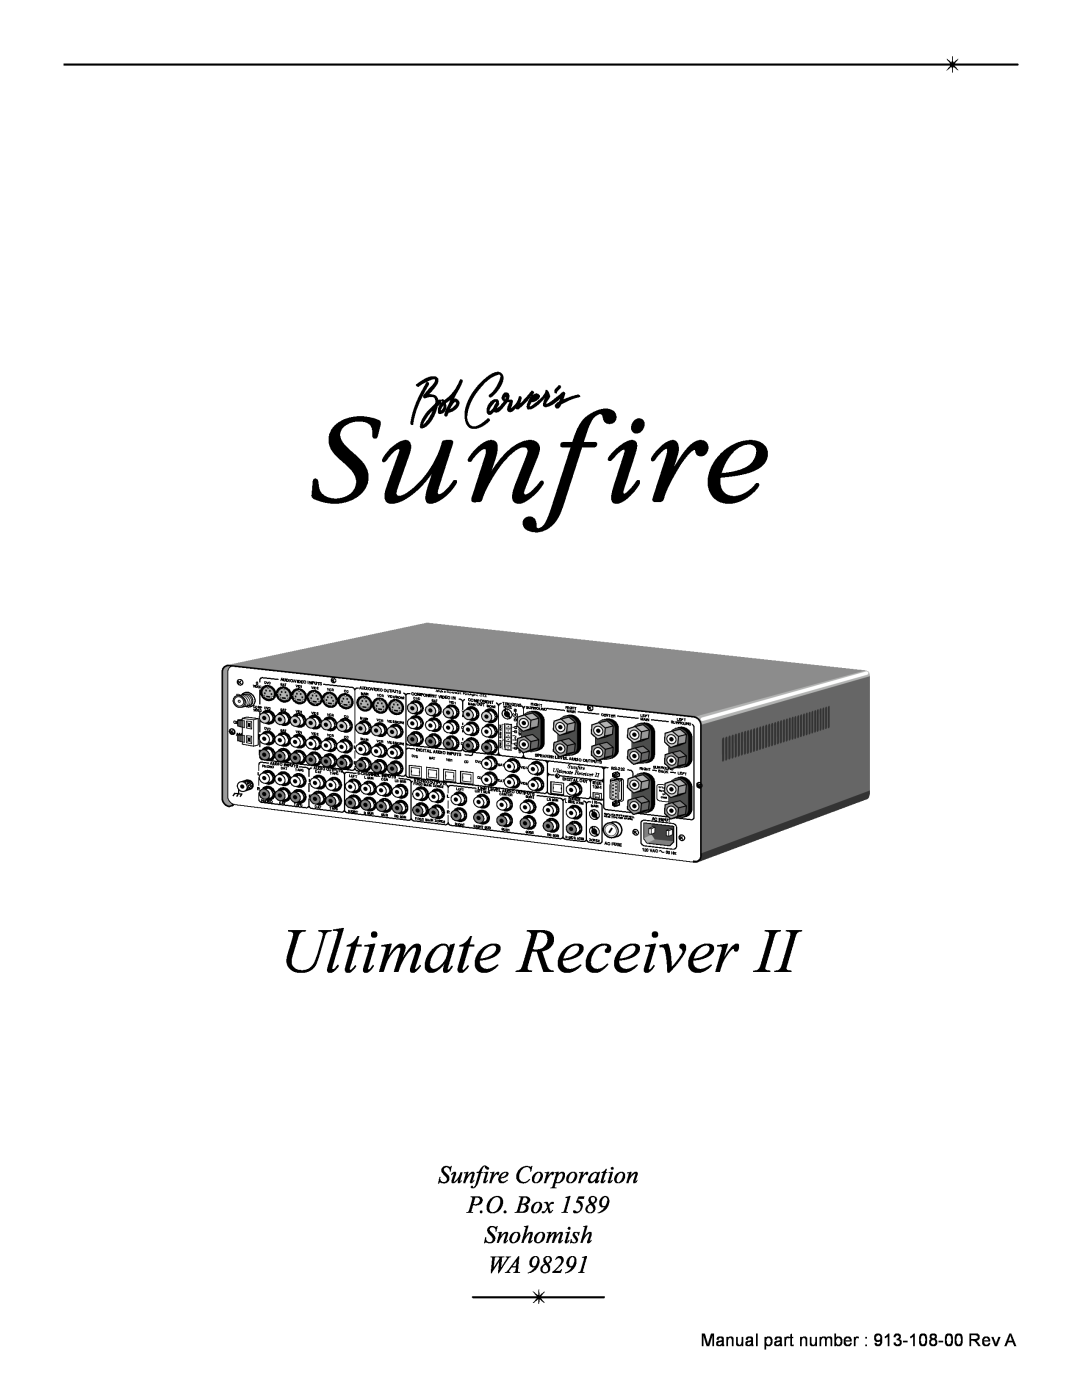 Sunfire Radio manual Ultimate Receiver, Manual part number 913-108-00Rev A, Washington, U.S.A 